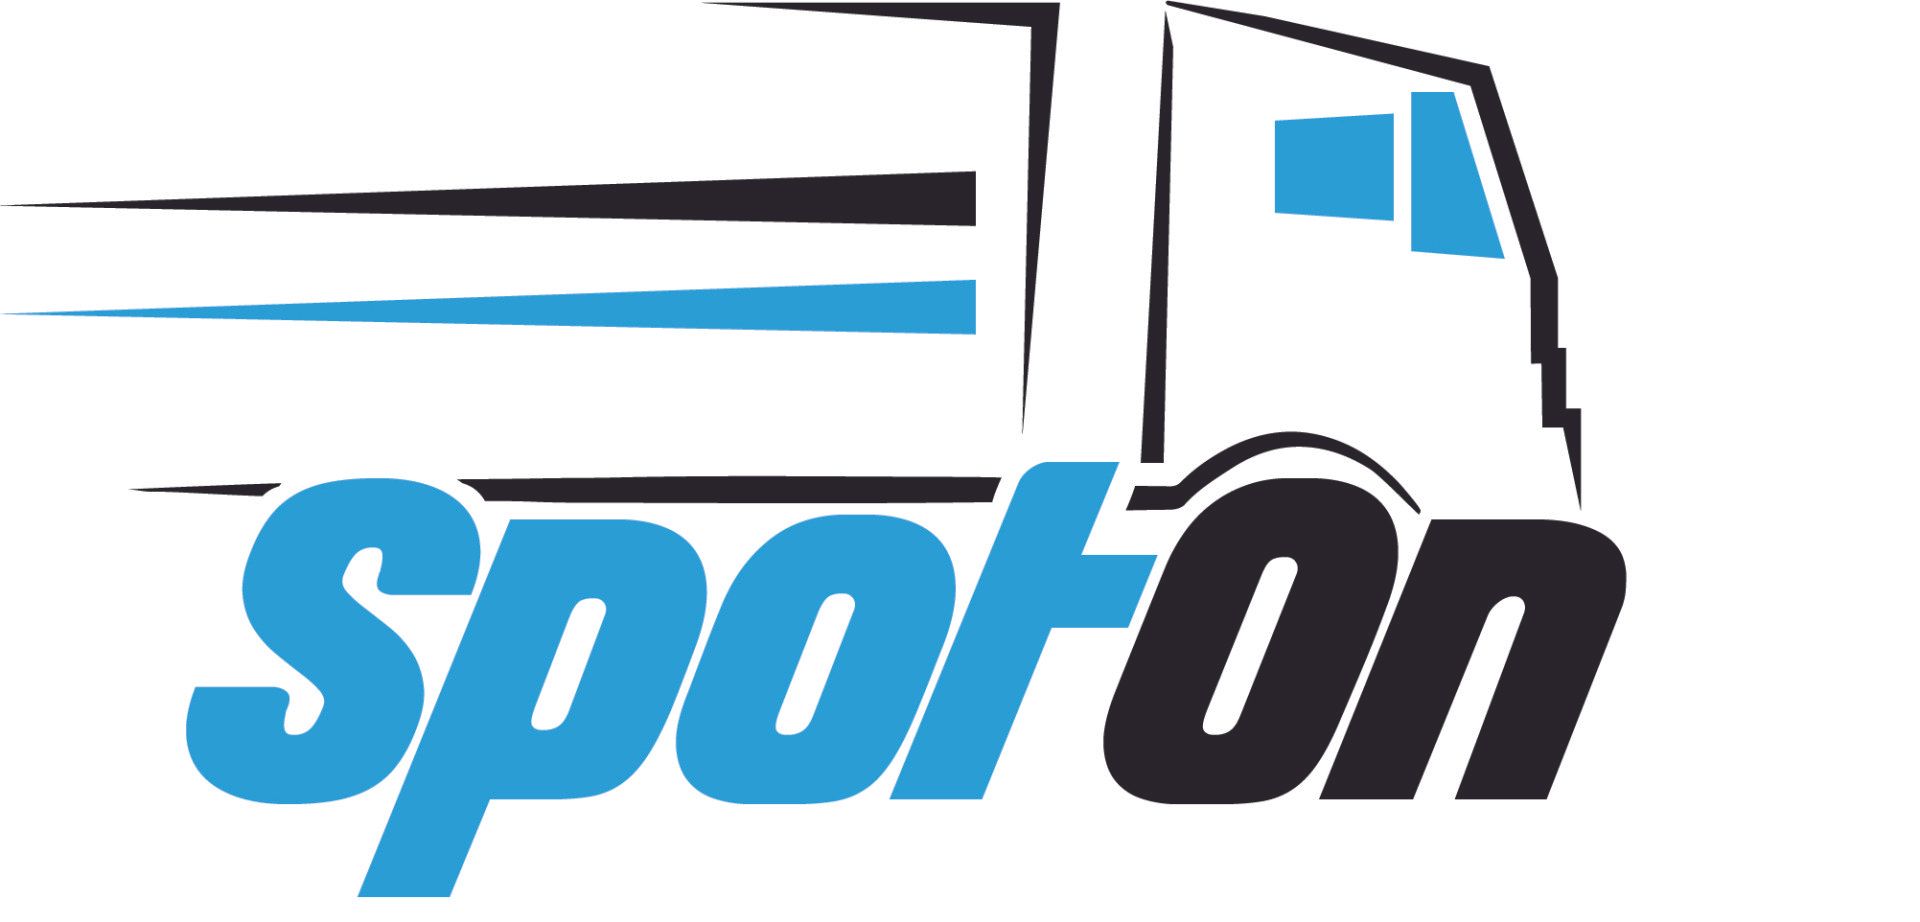 Spot On Trucking logo